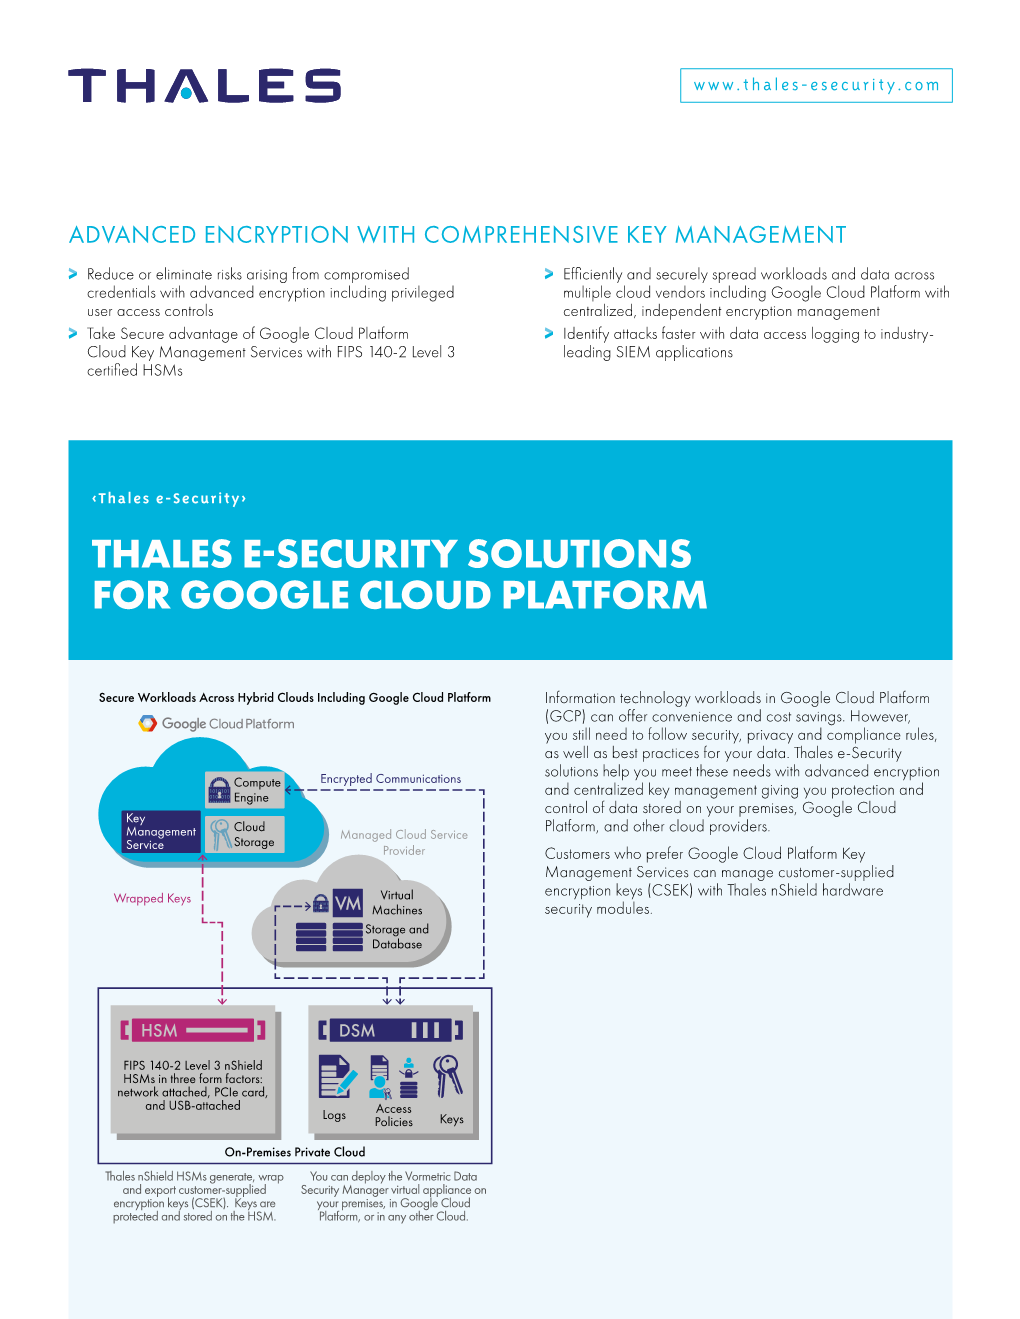 Thales E-Security Solutions for Google Cloud Platform